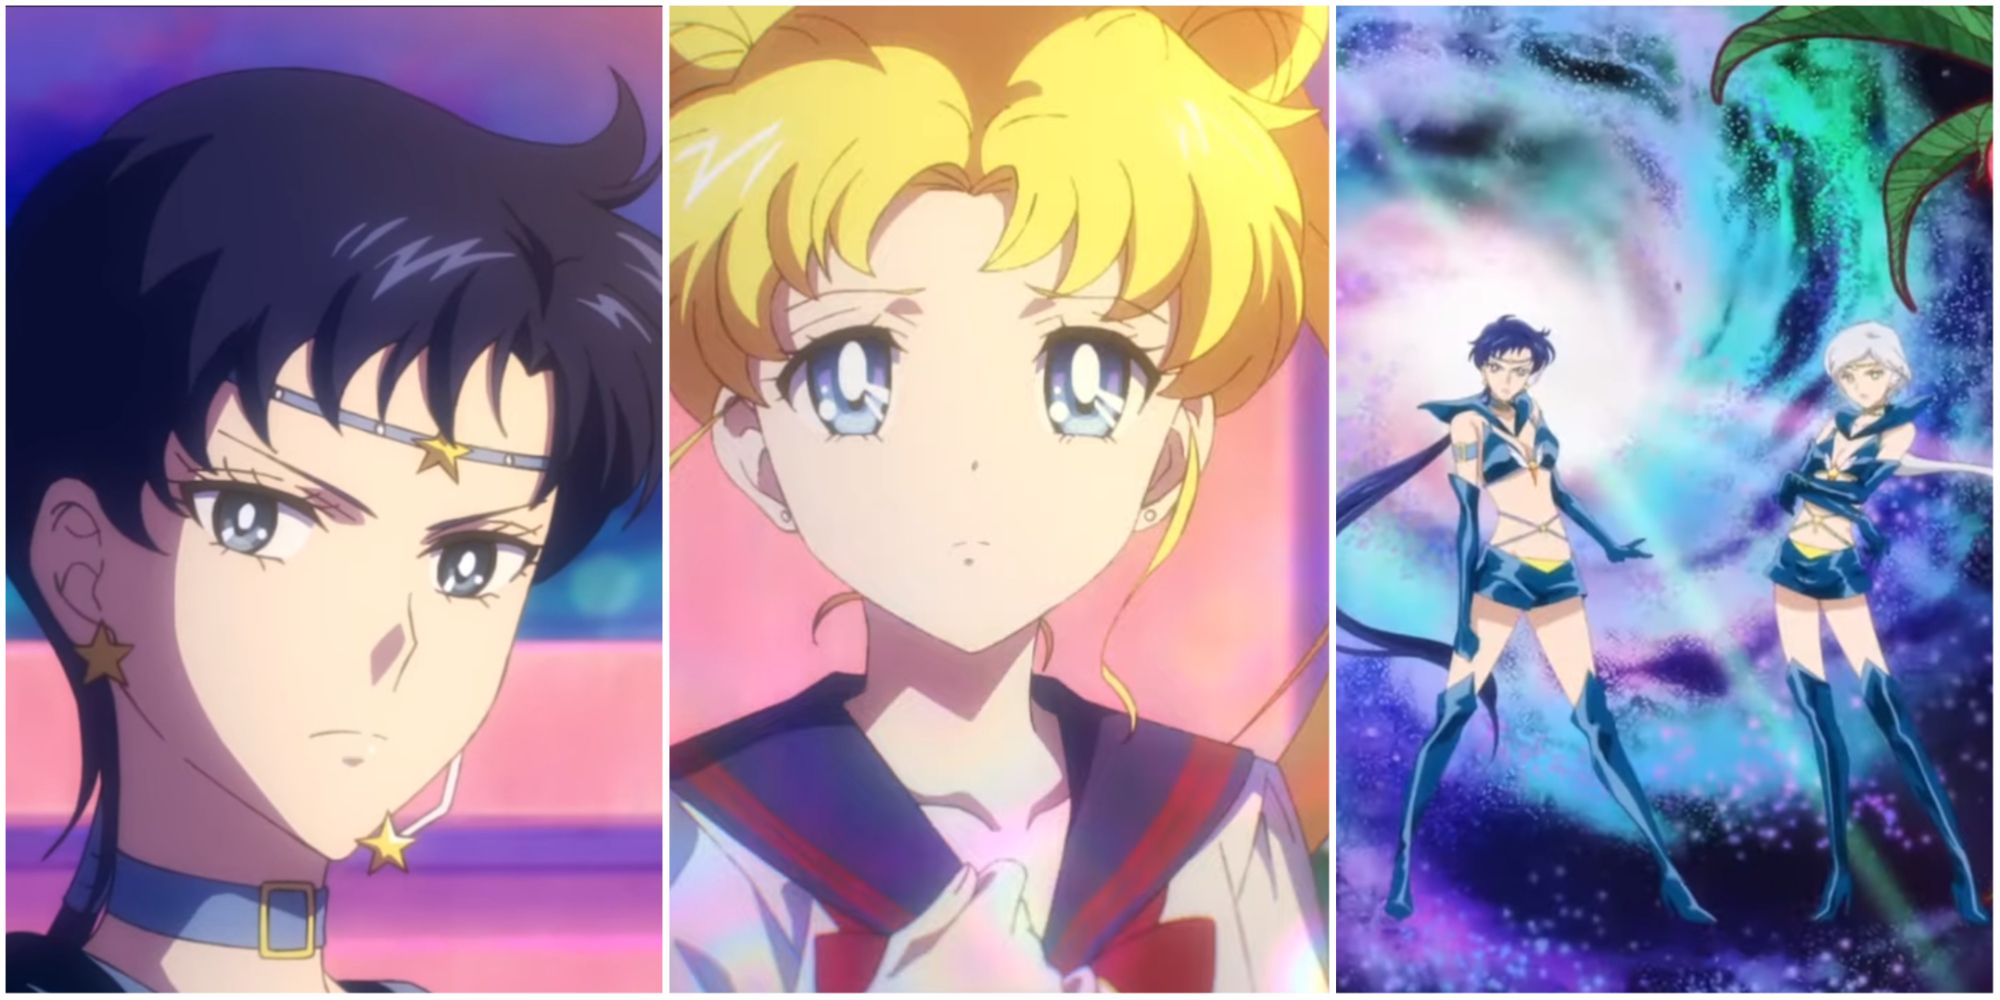  Série clássica 'Sailor Moon S' estreia na Netflix